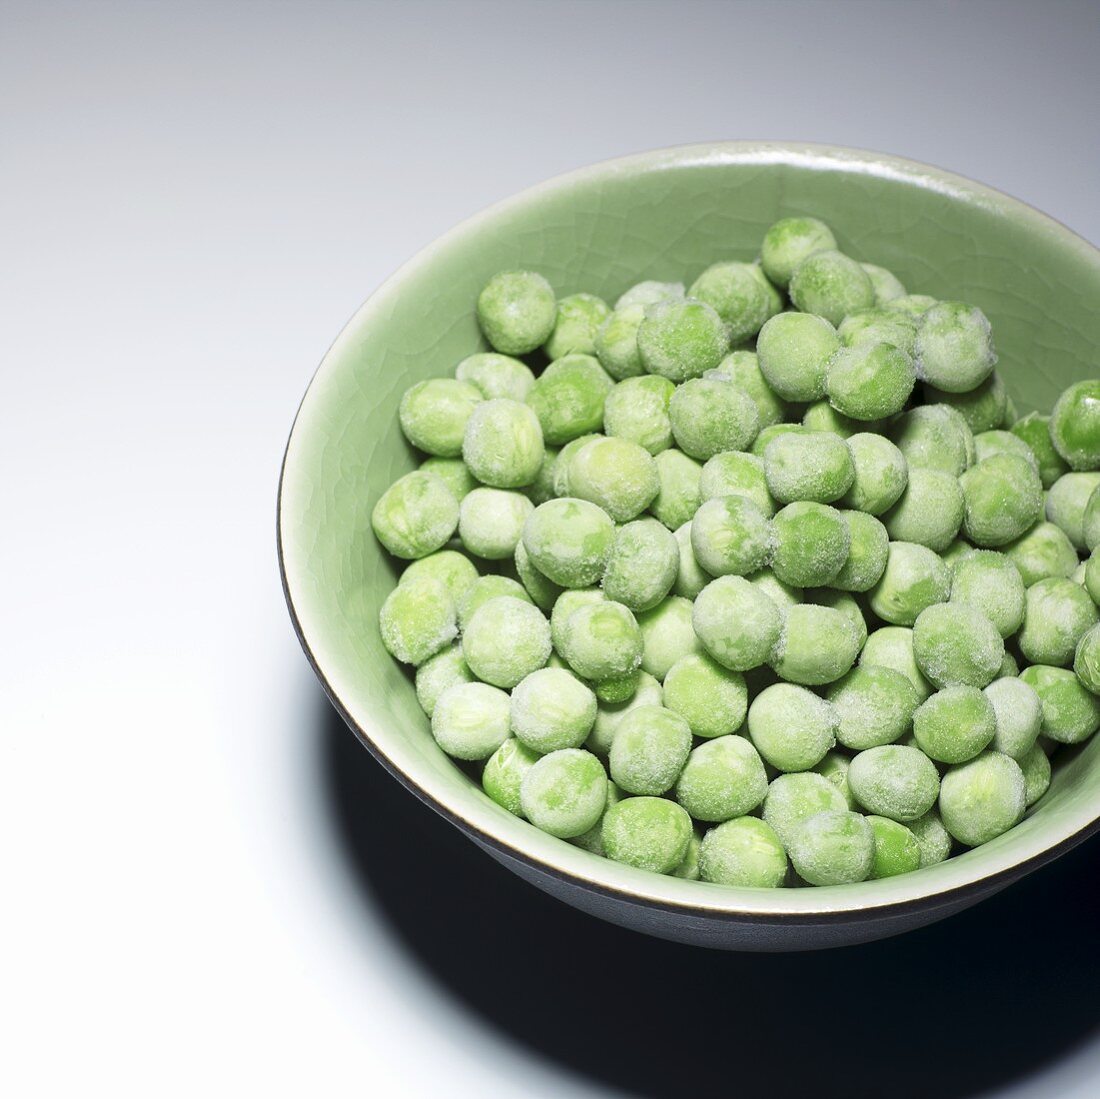 Frozen peas in a dish